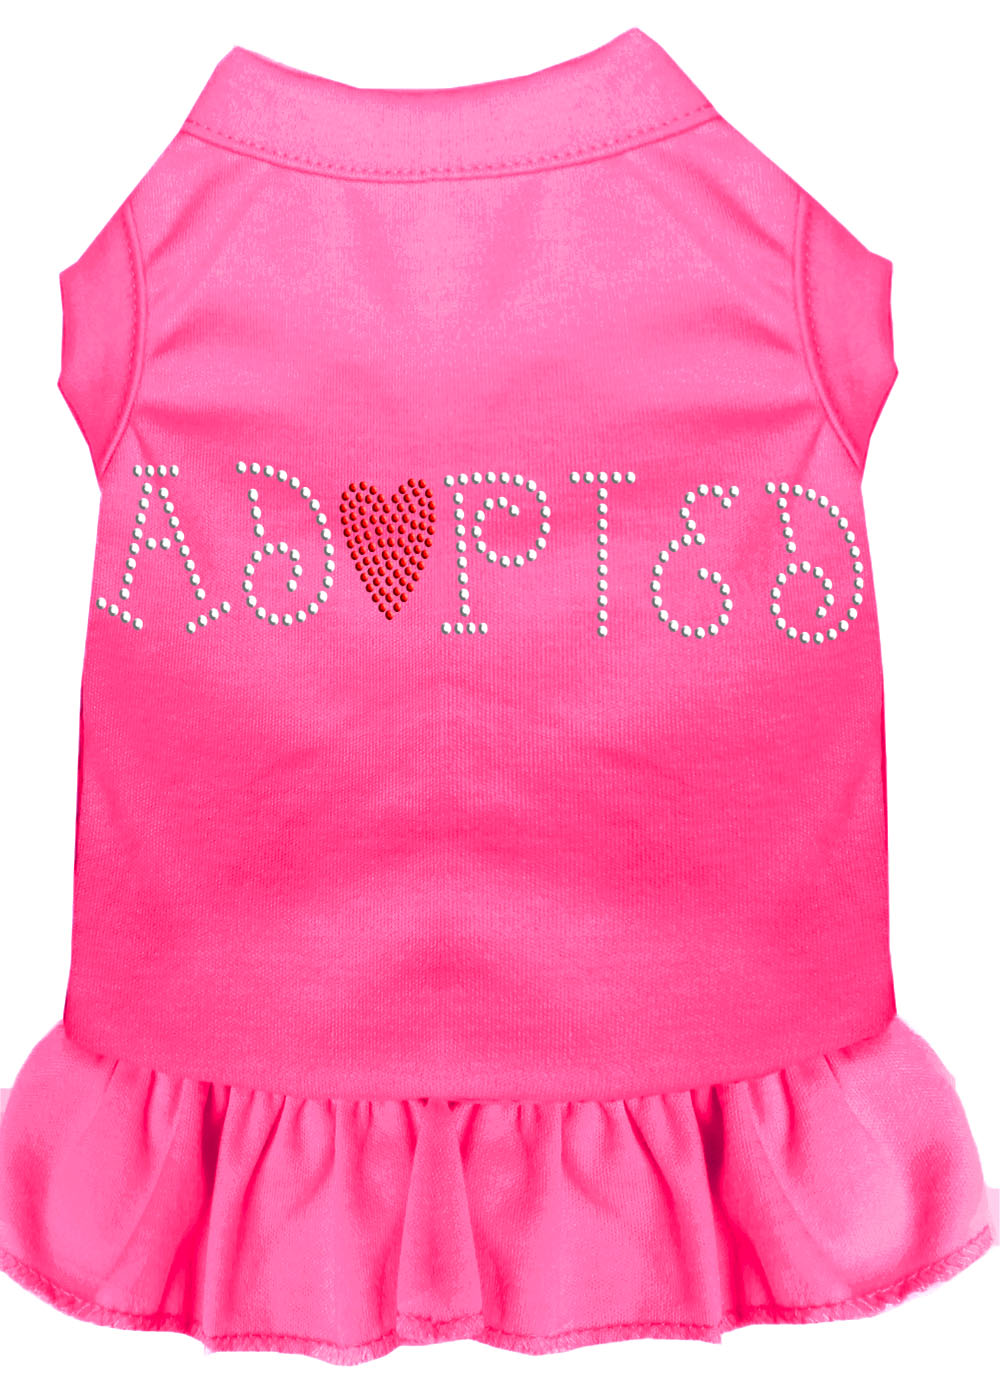 Adopted Rhinestone Dress Bright Pink Lg